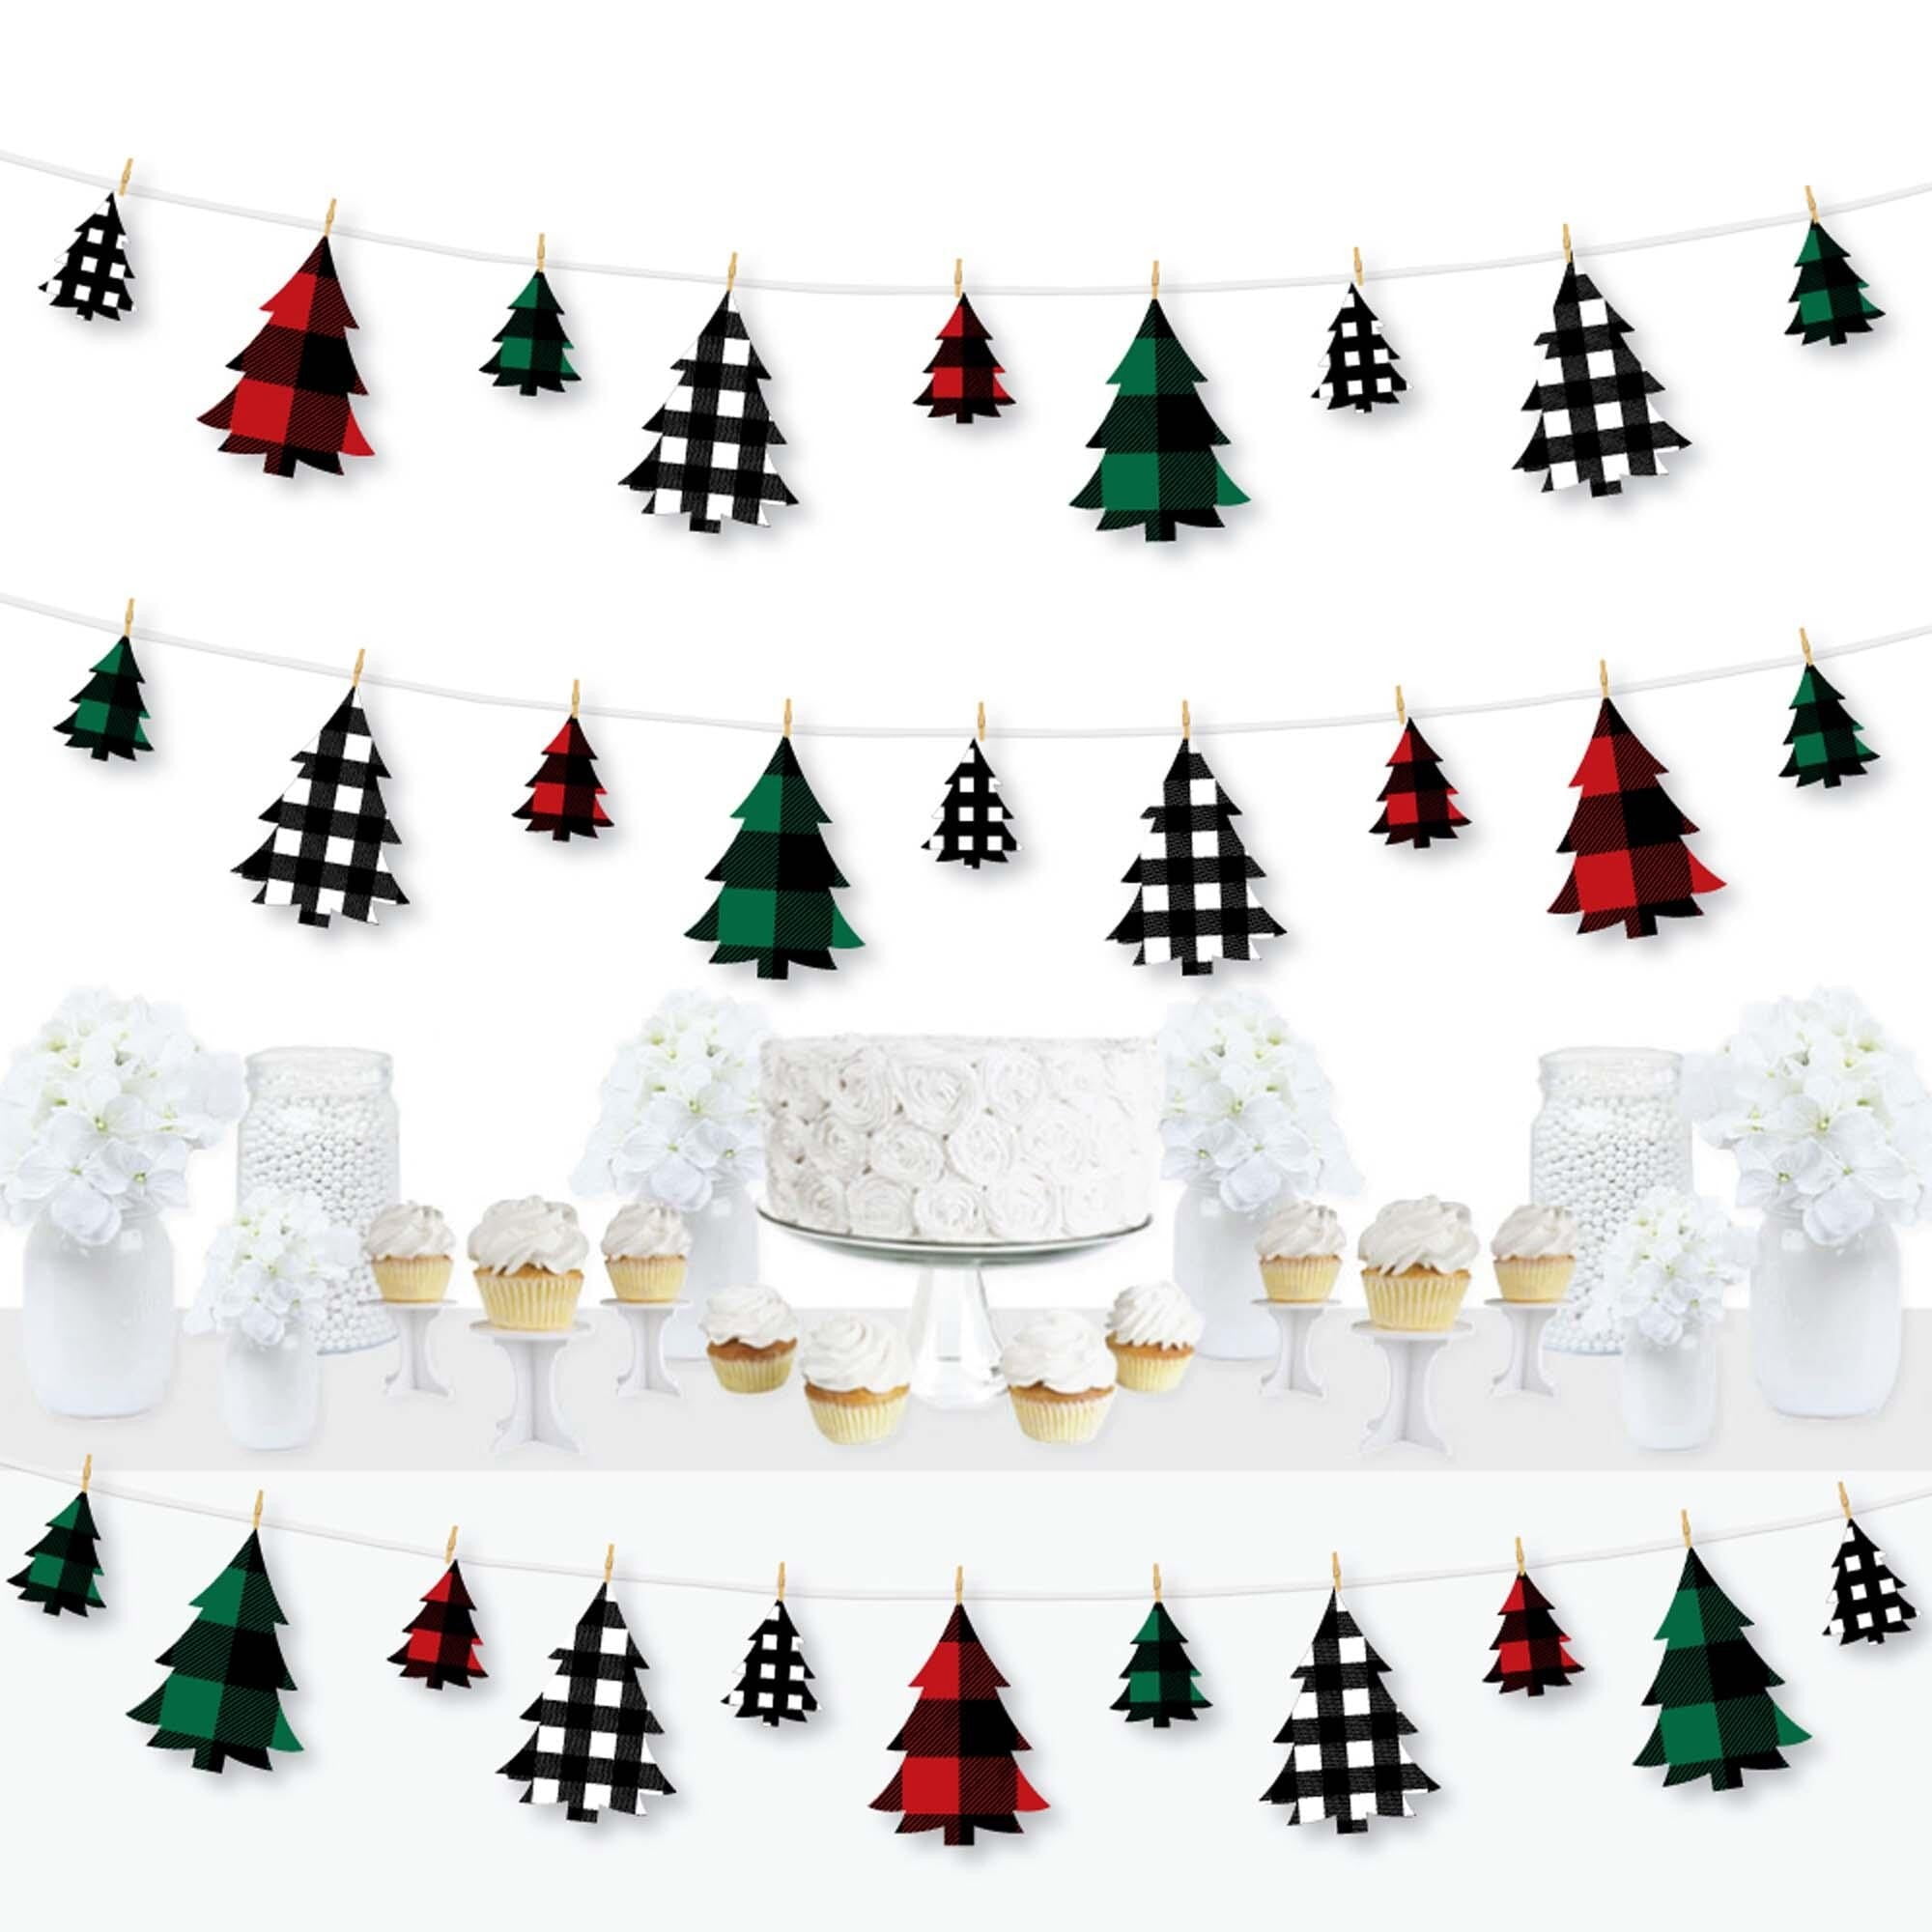 11 Classy Buffalo Plaid Christmas Decor Projects • OhMeOhMy Blog